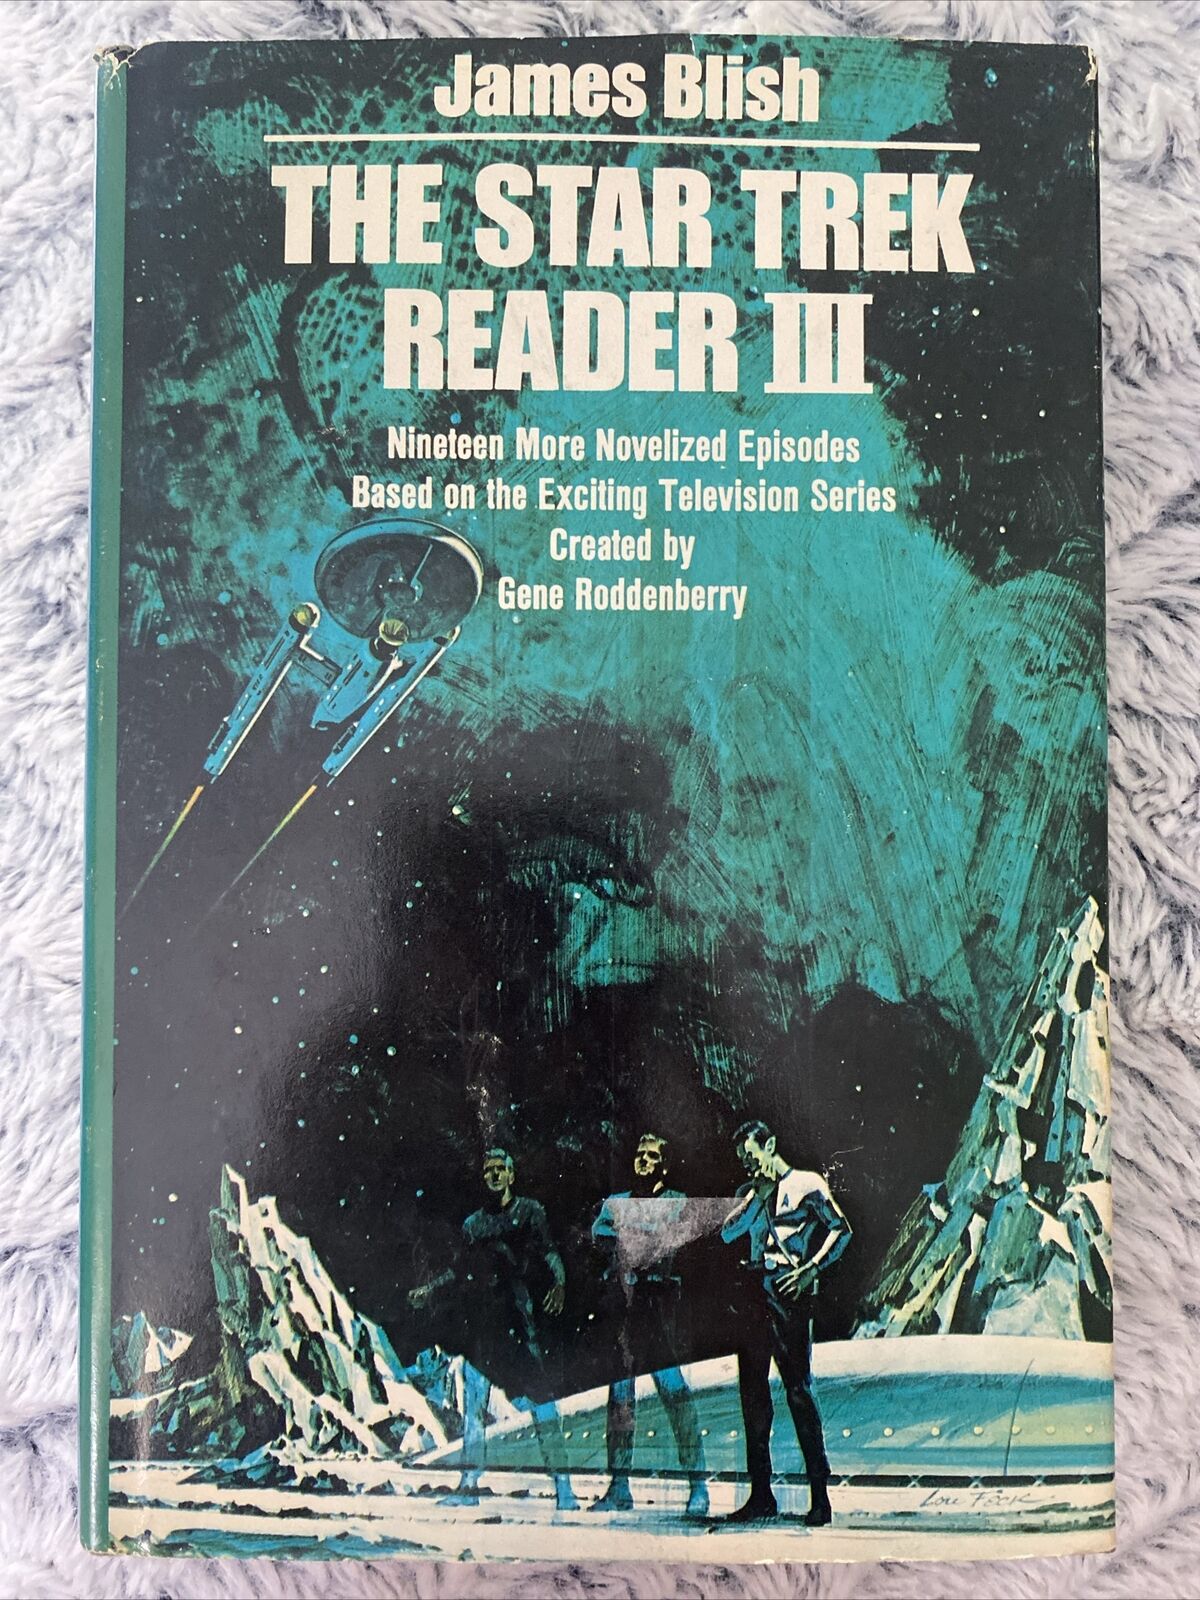 Vintage 1977 Star Trek Reader III Hardcover Book by James Blish